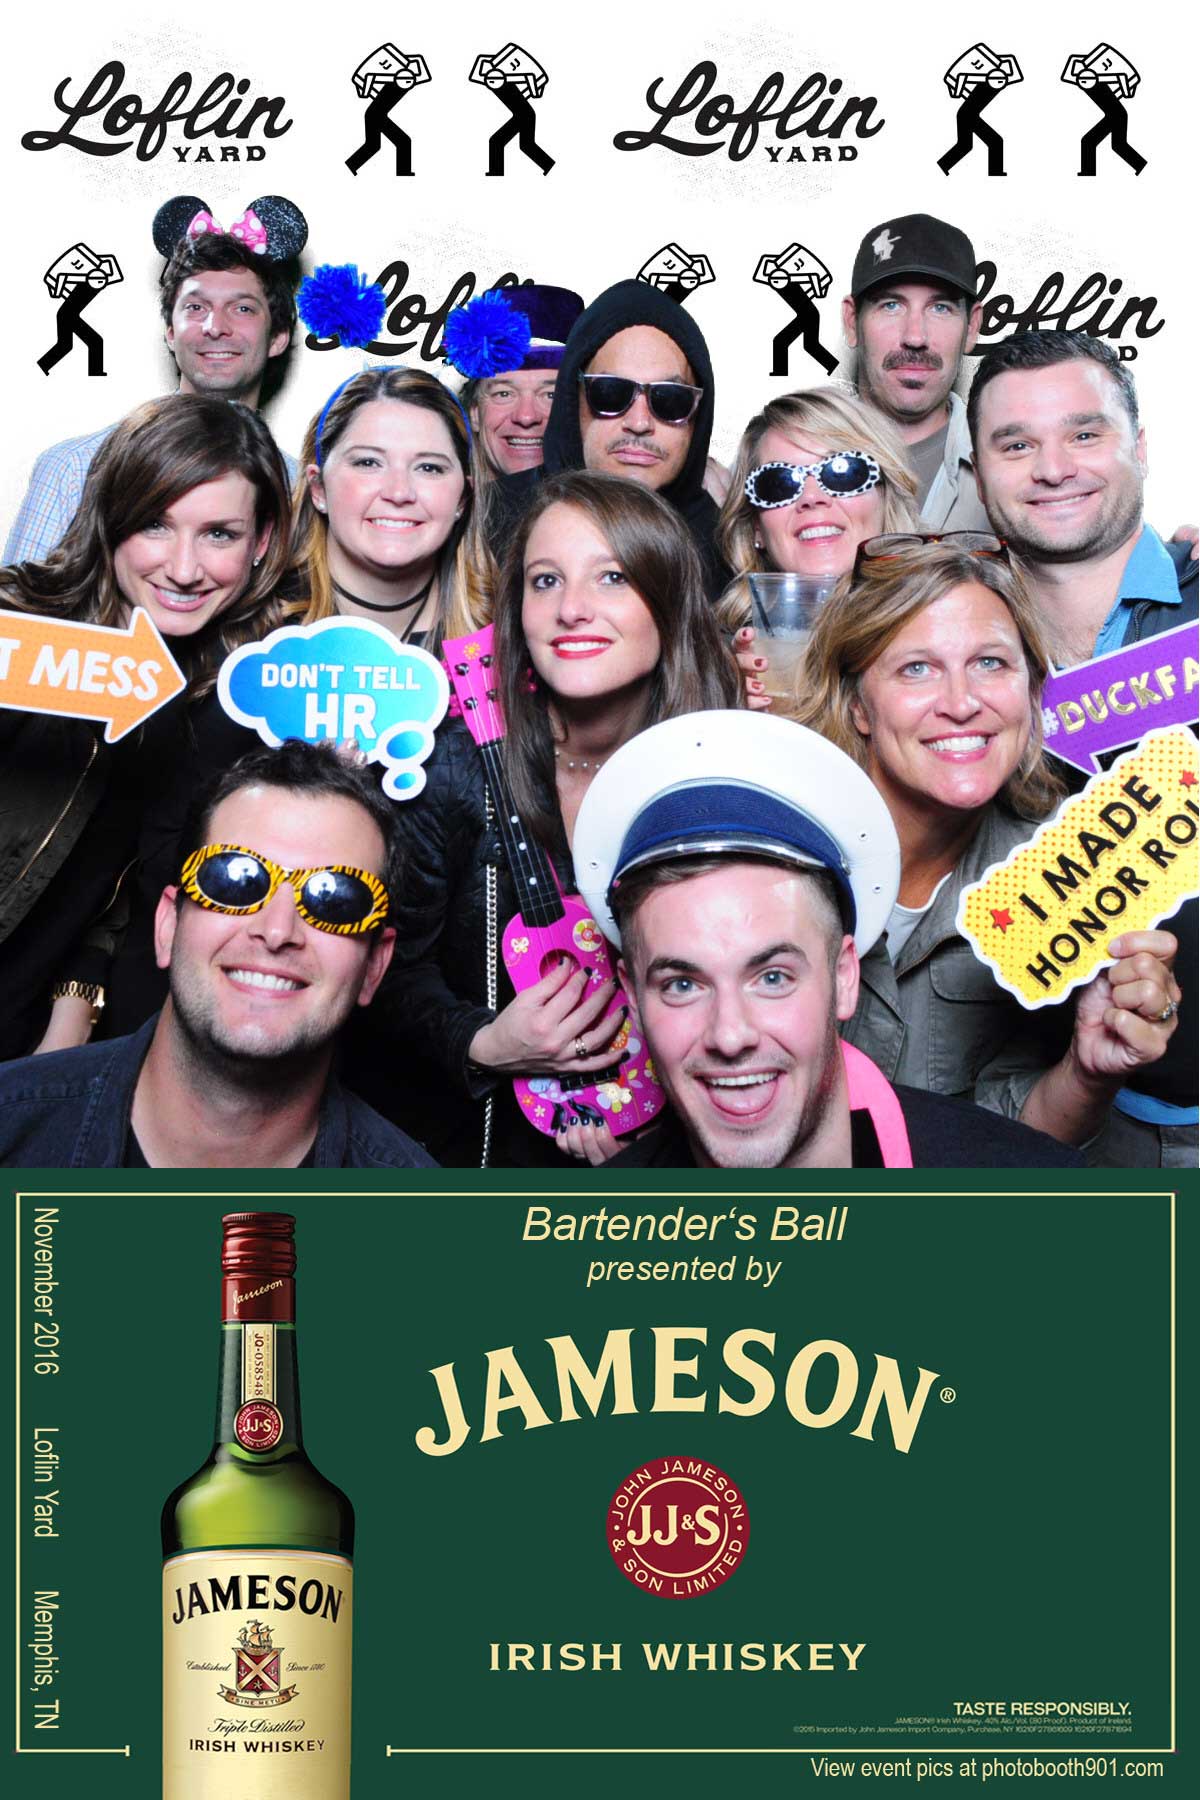 Bartenders Ball Photo Booth at Loflin Yard with Jameson Irish Whiskey